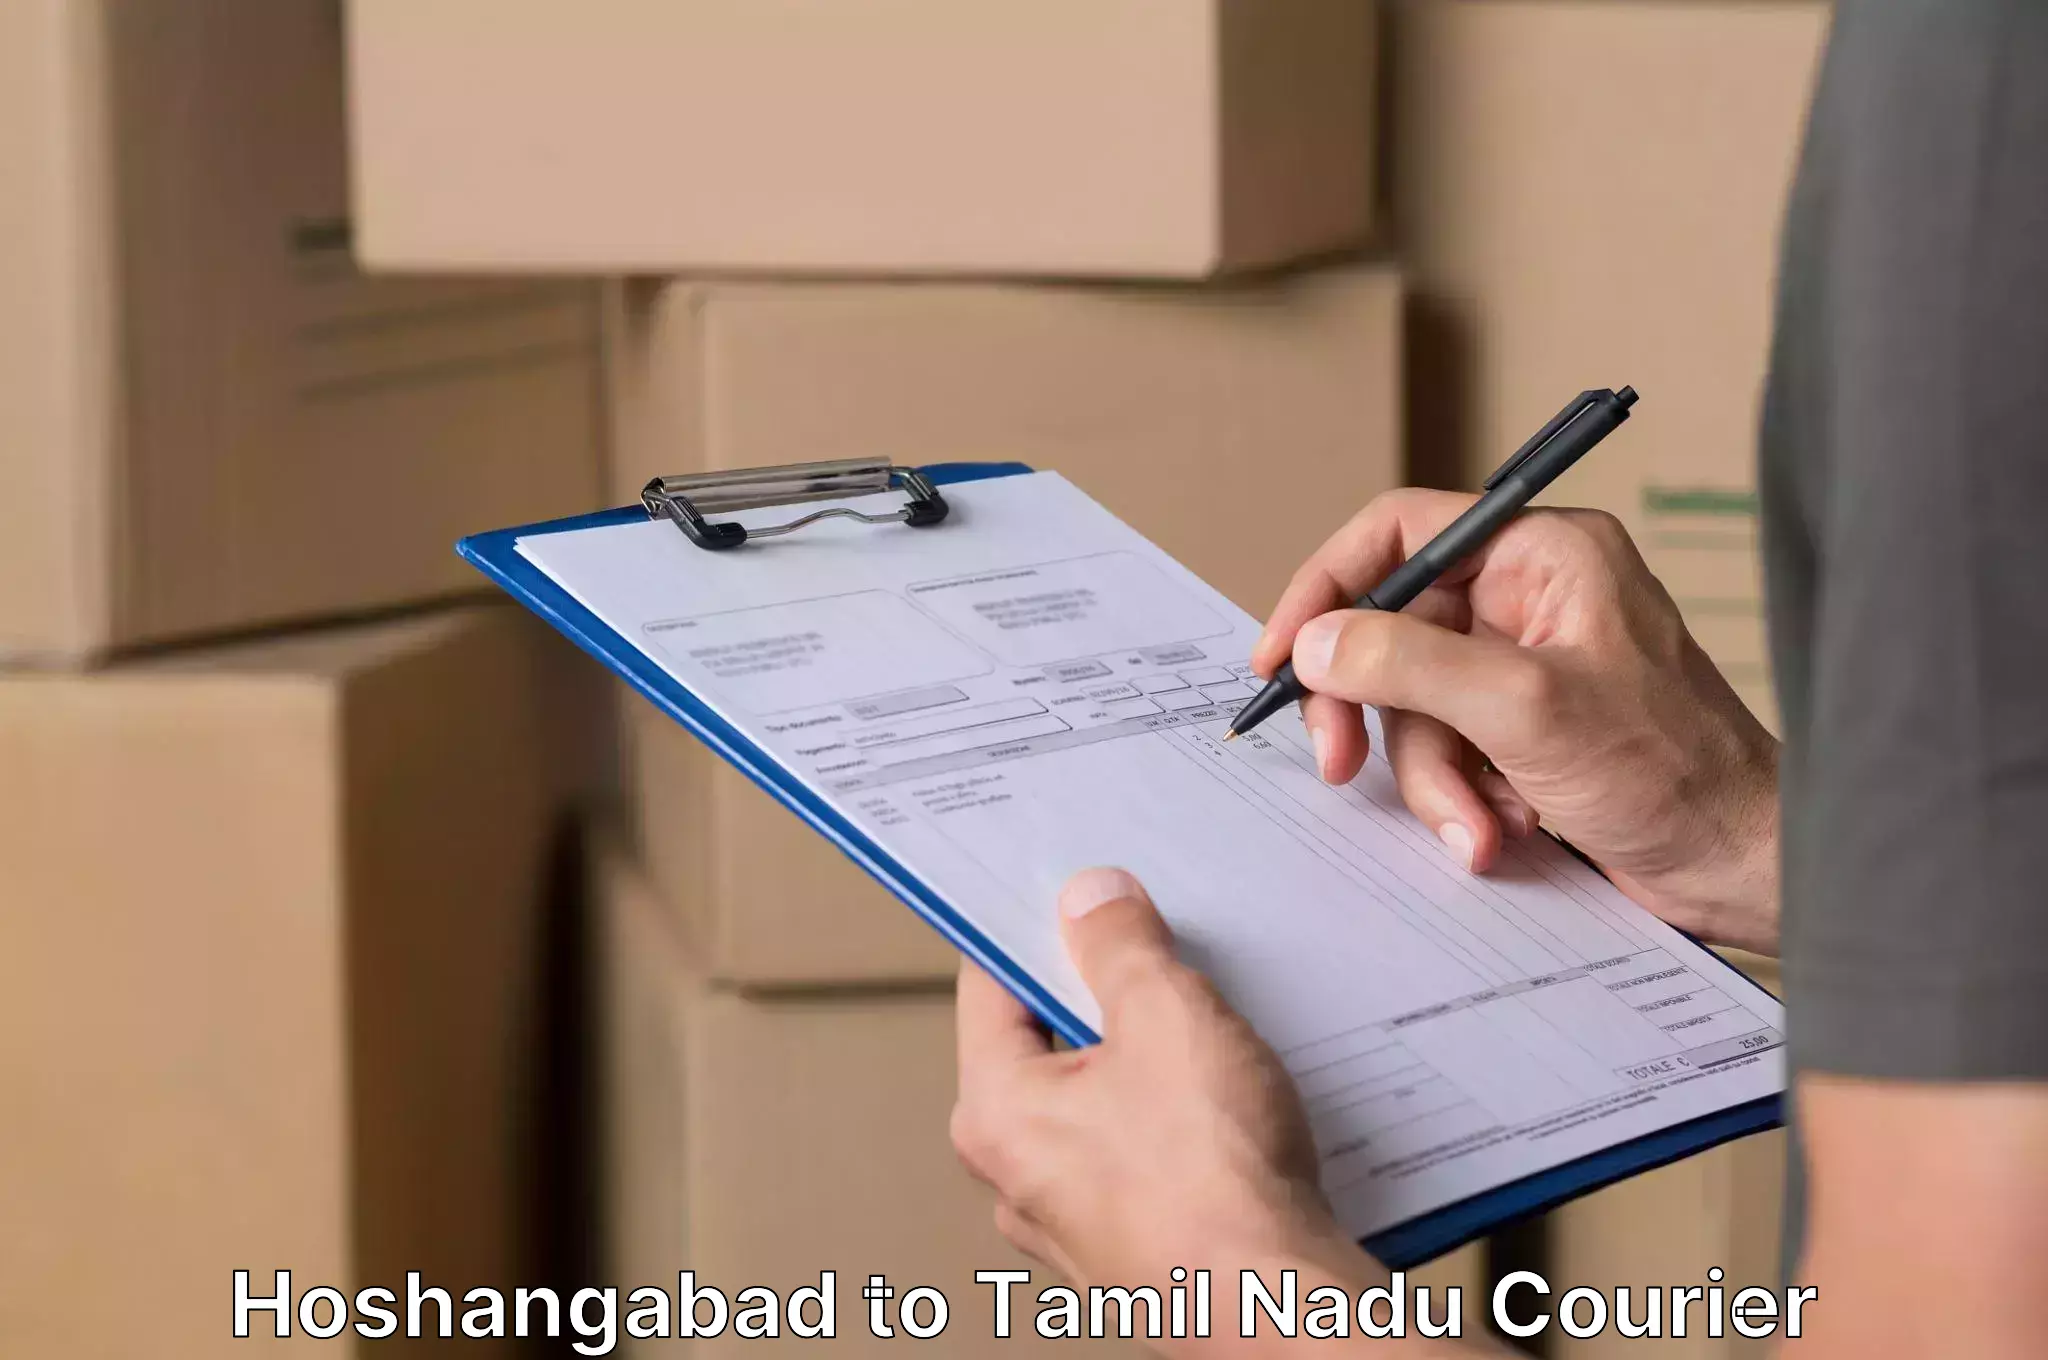 Household goods transport service Hoshangabad to Tamil Nadu